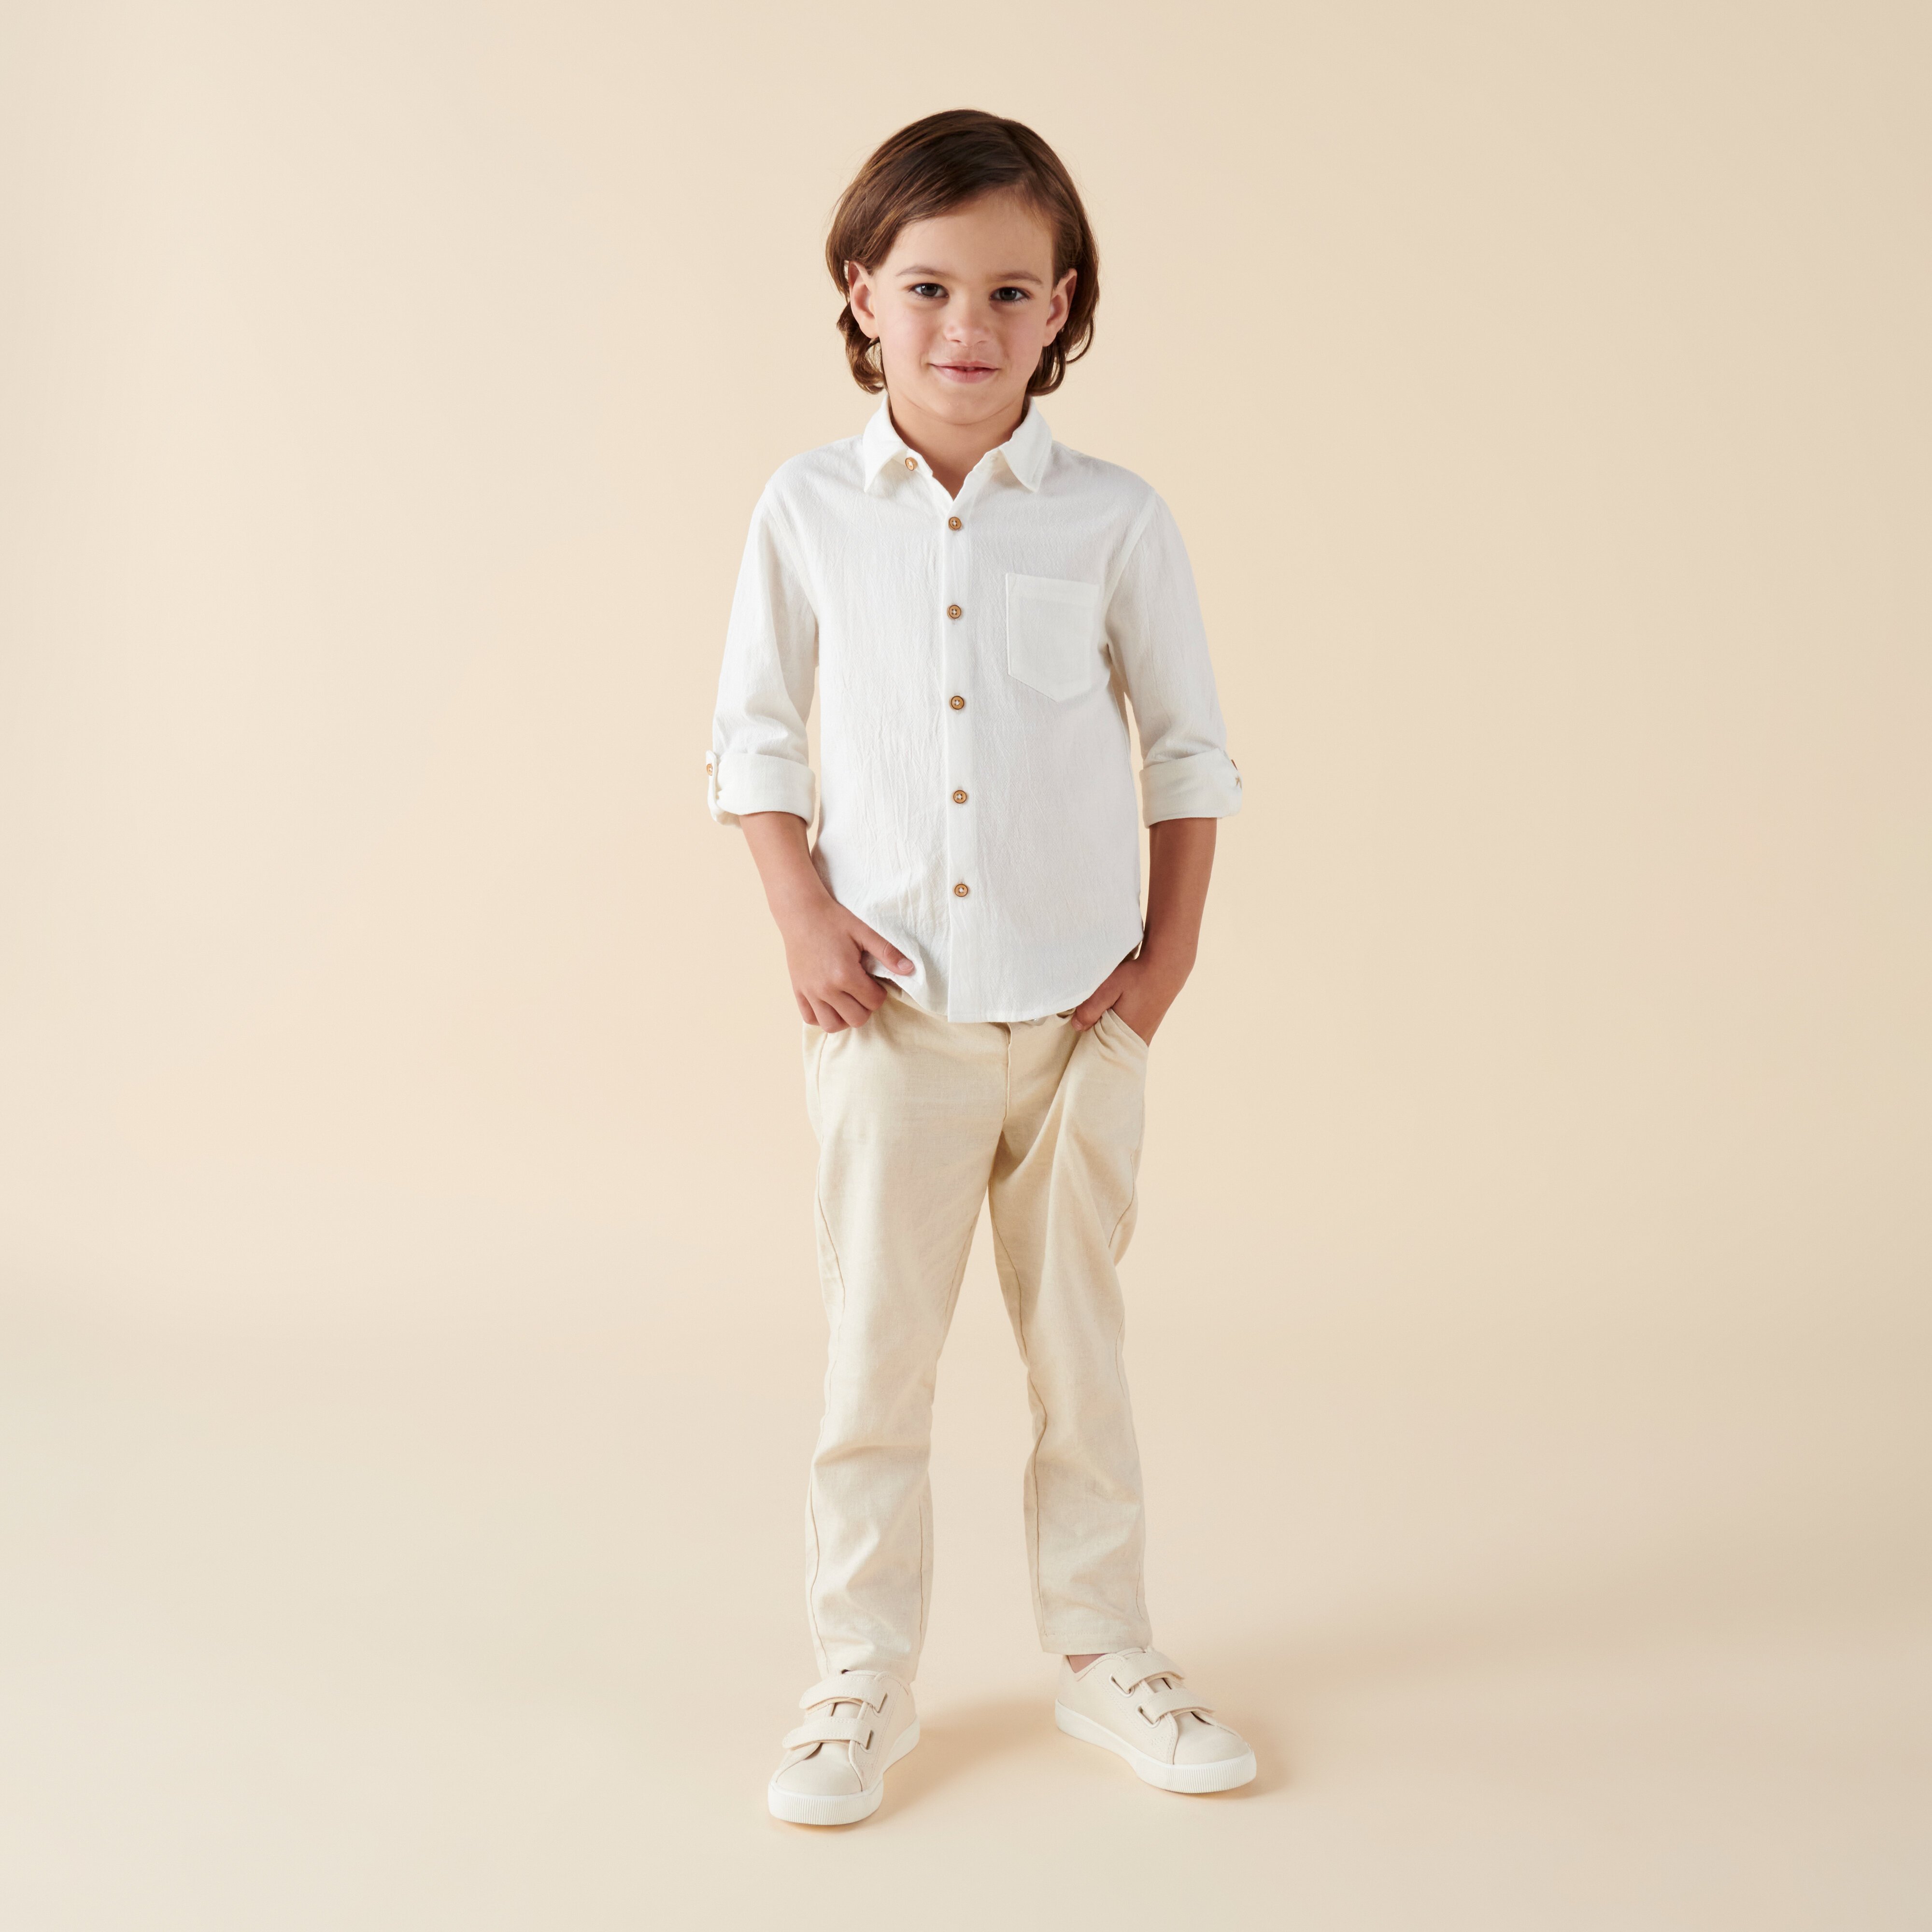 Designer Kidz Finley Linen Pants - Sand - CLOTHING-BABY-Baby Special ...